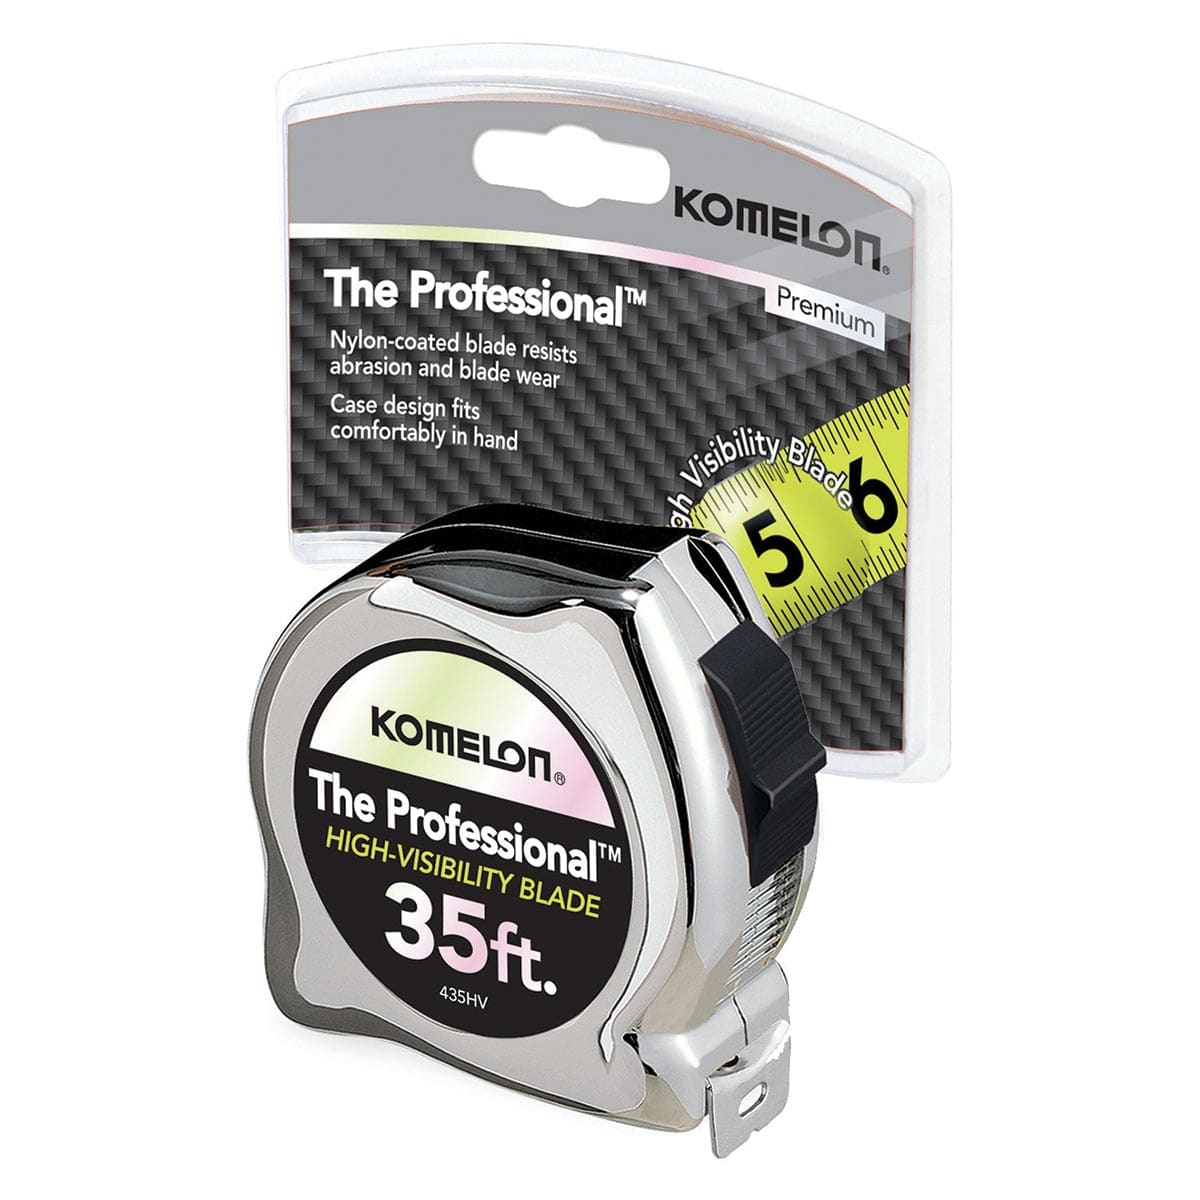 Komelon The Professional Chrome Tape Measure